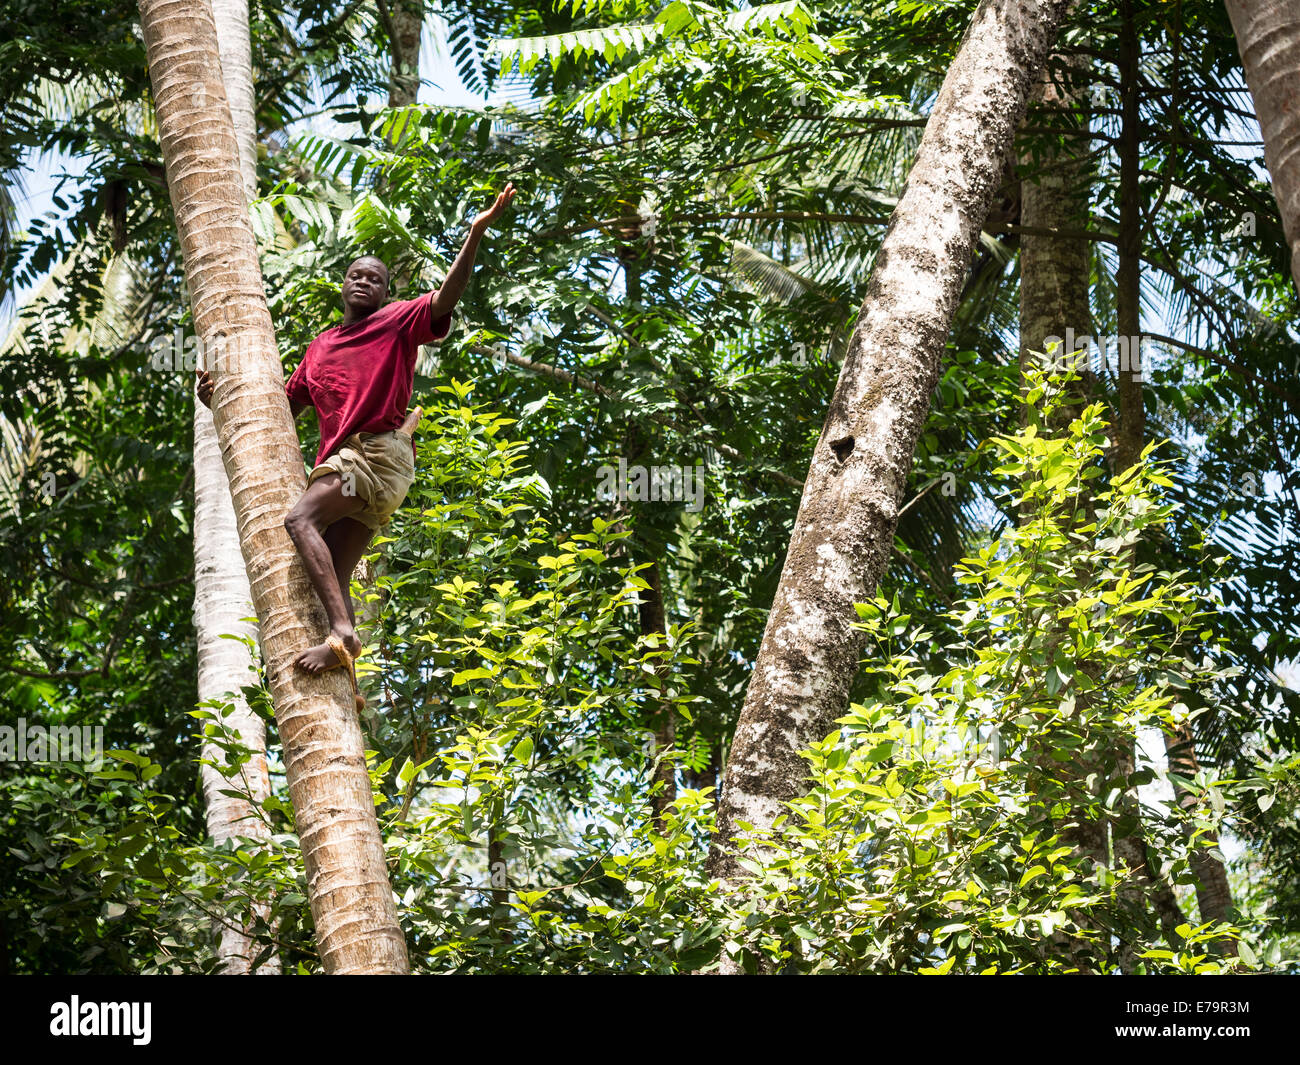 A man climbing a tree to get coconuts, Zanzibar island, Africa. Stock Photo